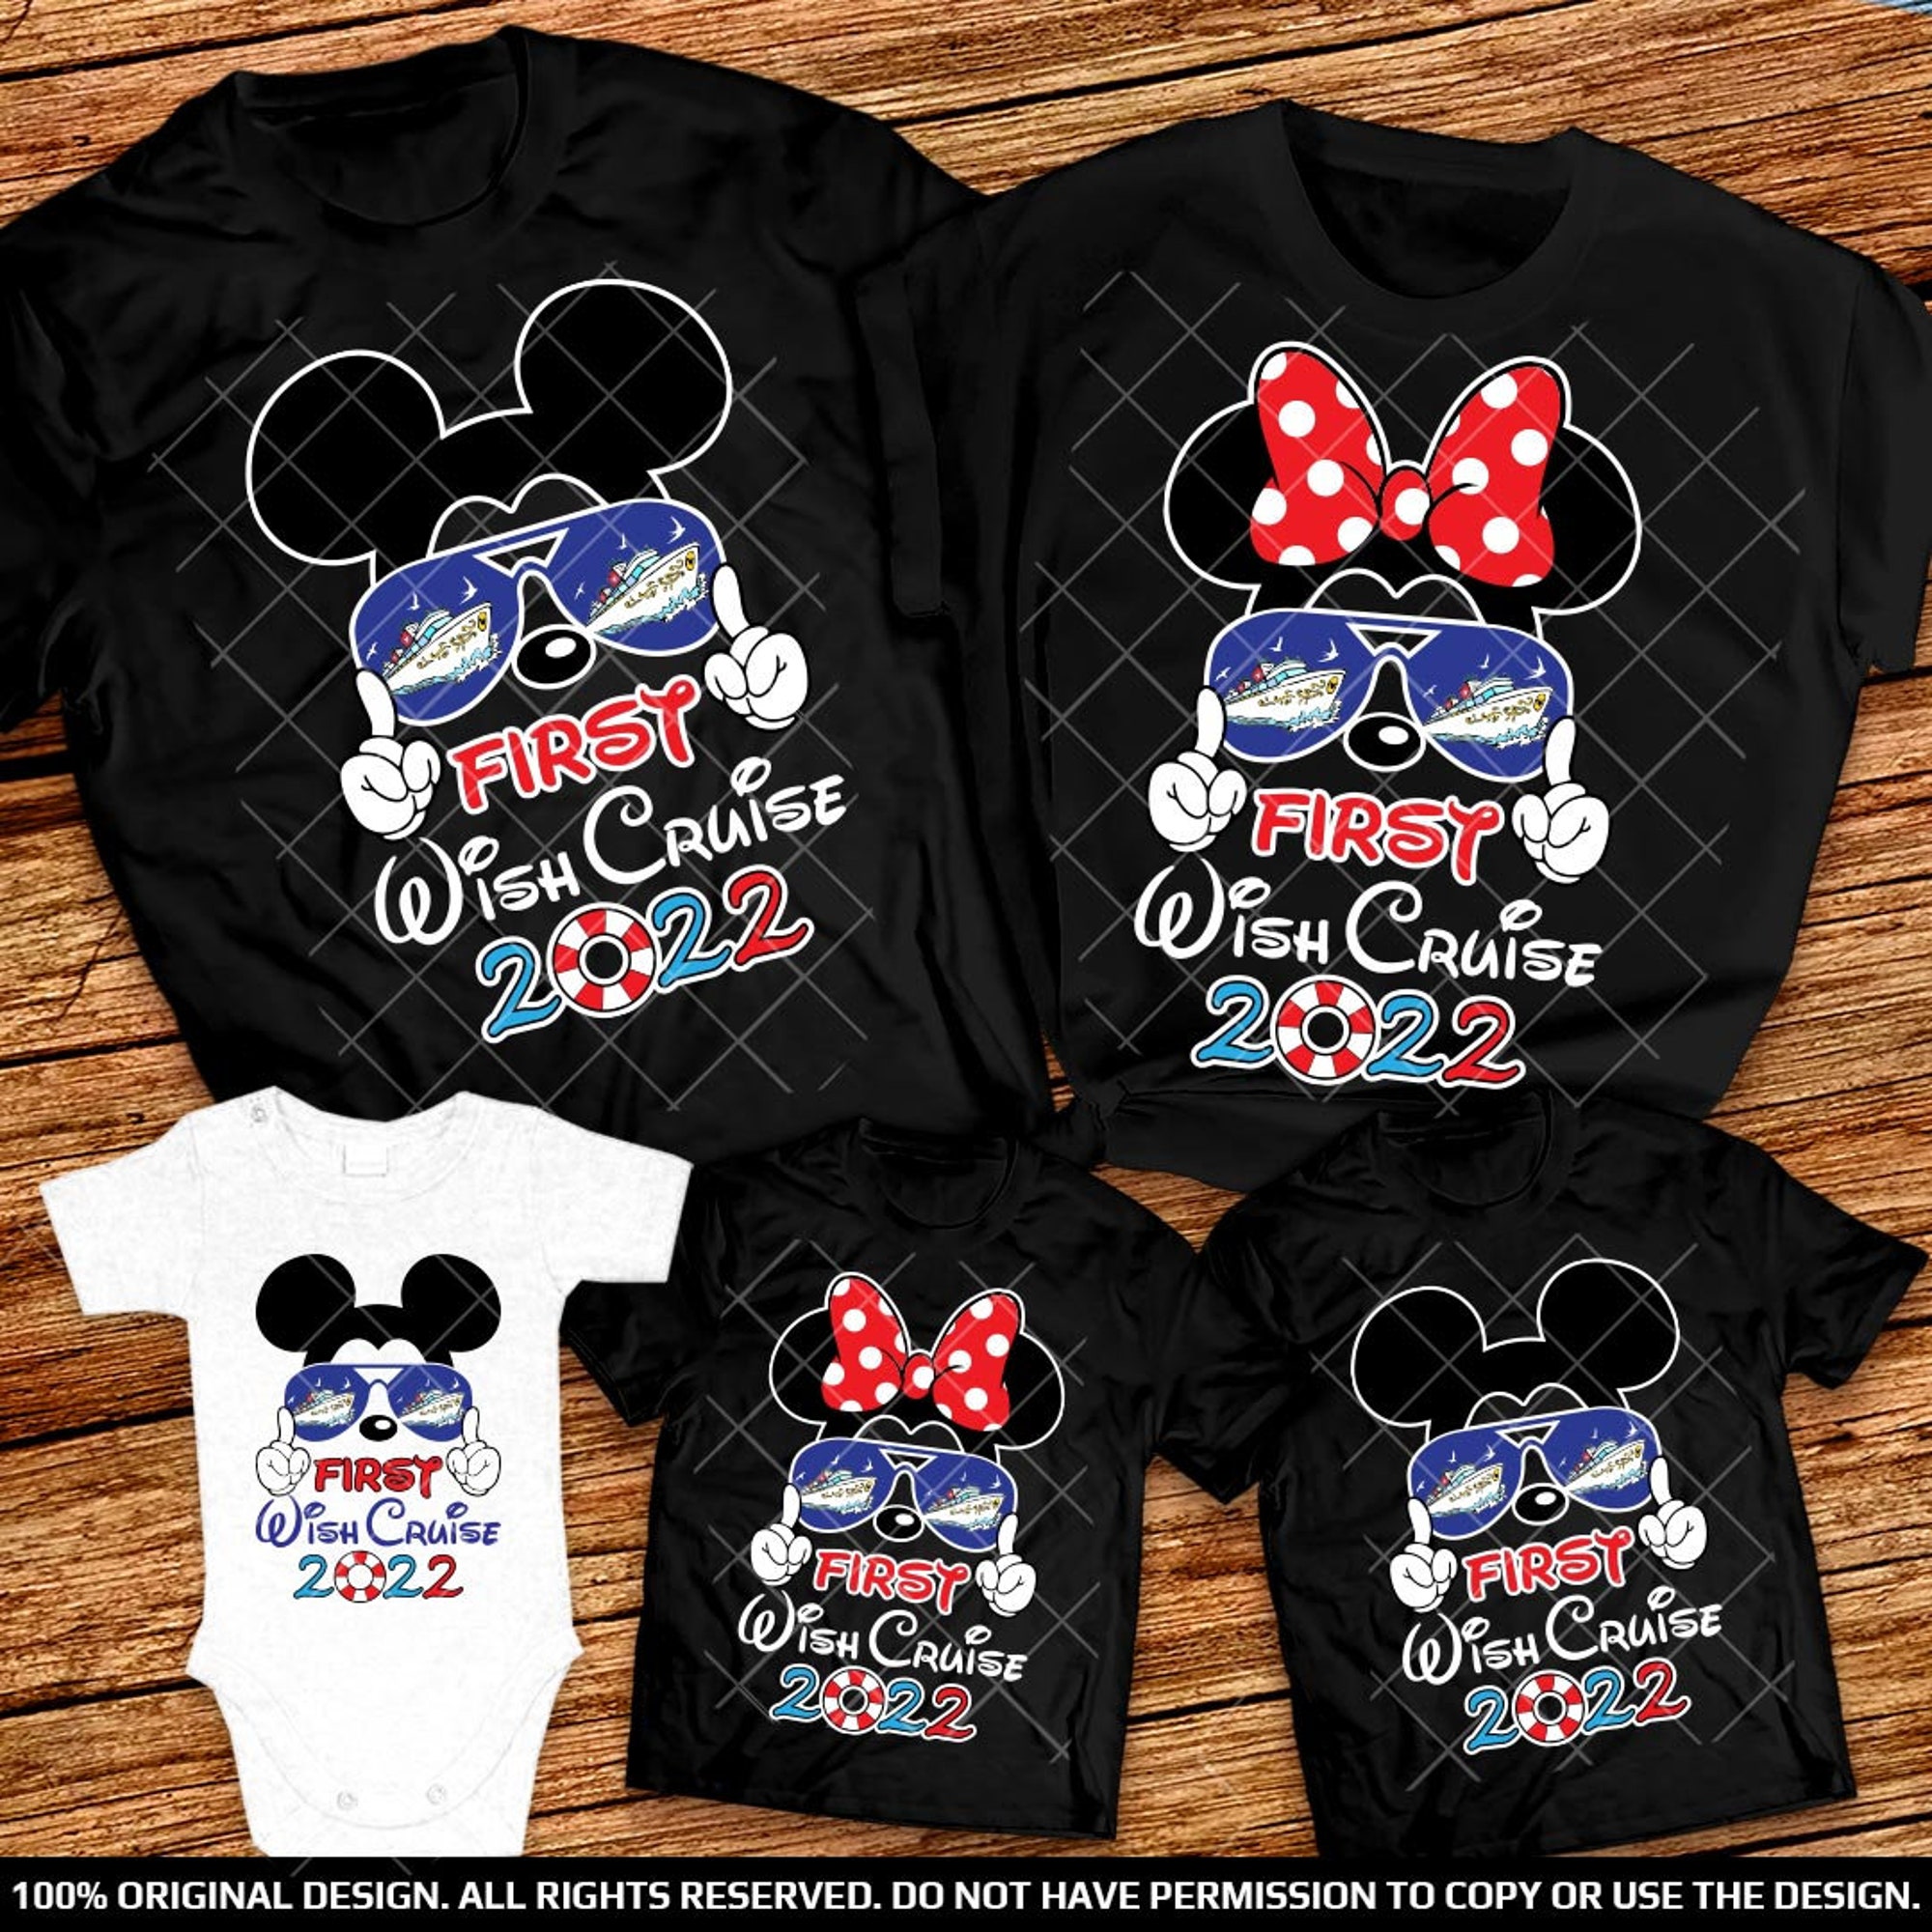 First Wish Cruise family shirt 2022, Cruise shirt 2022, Disney cruise family shirts